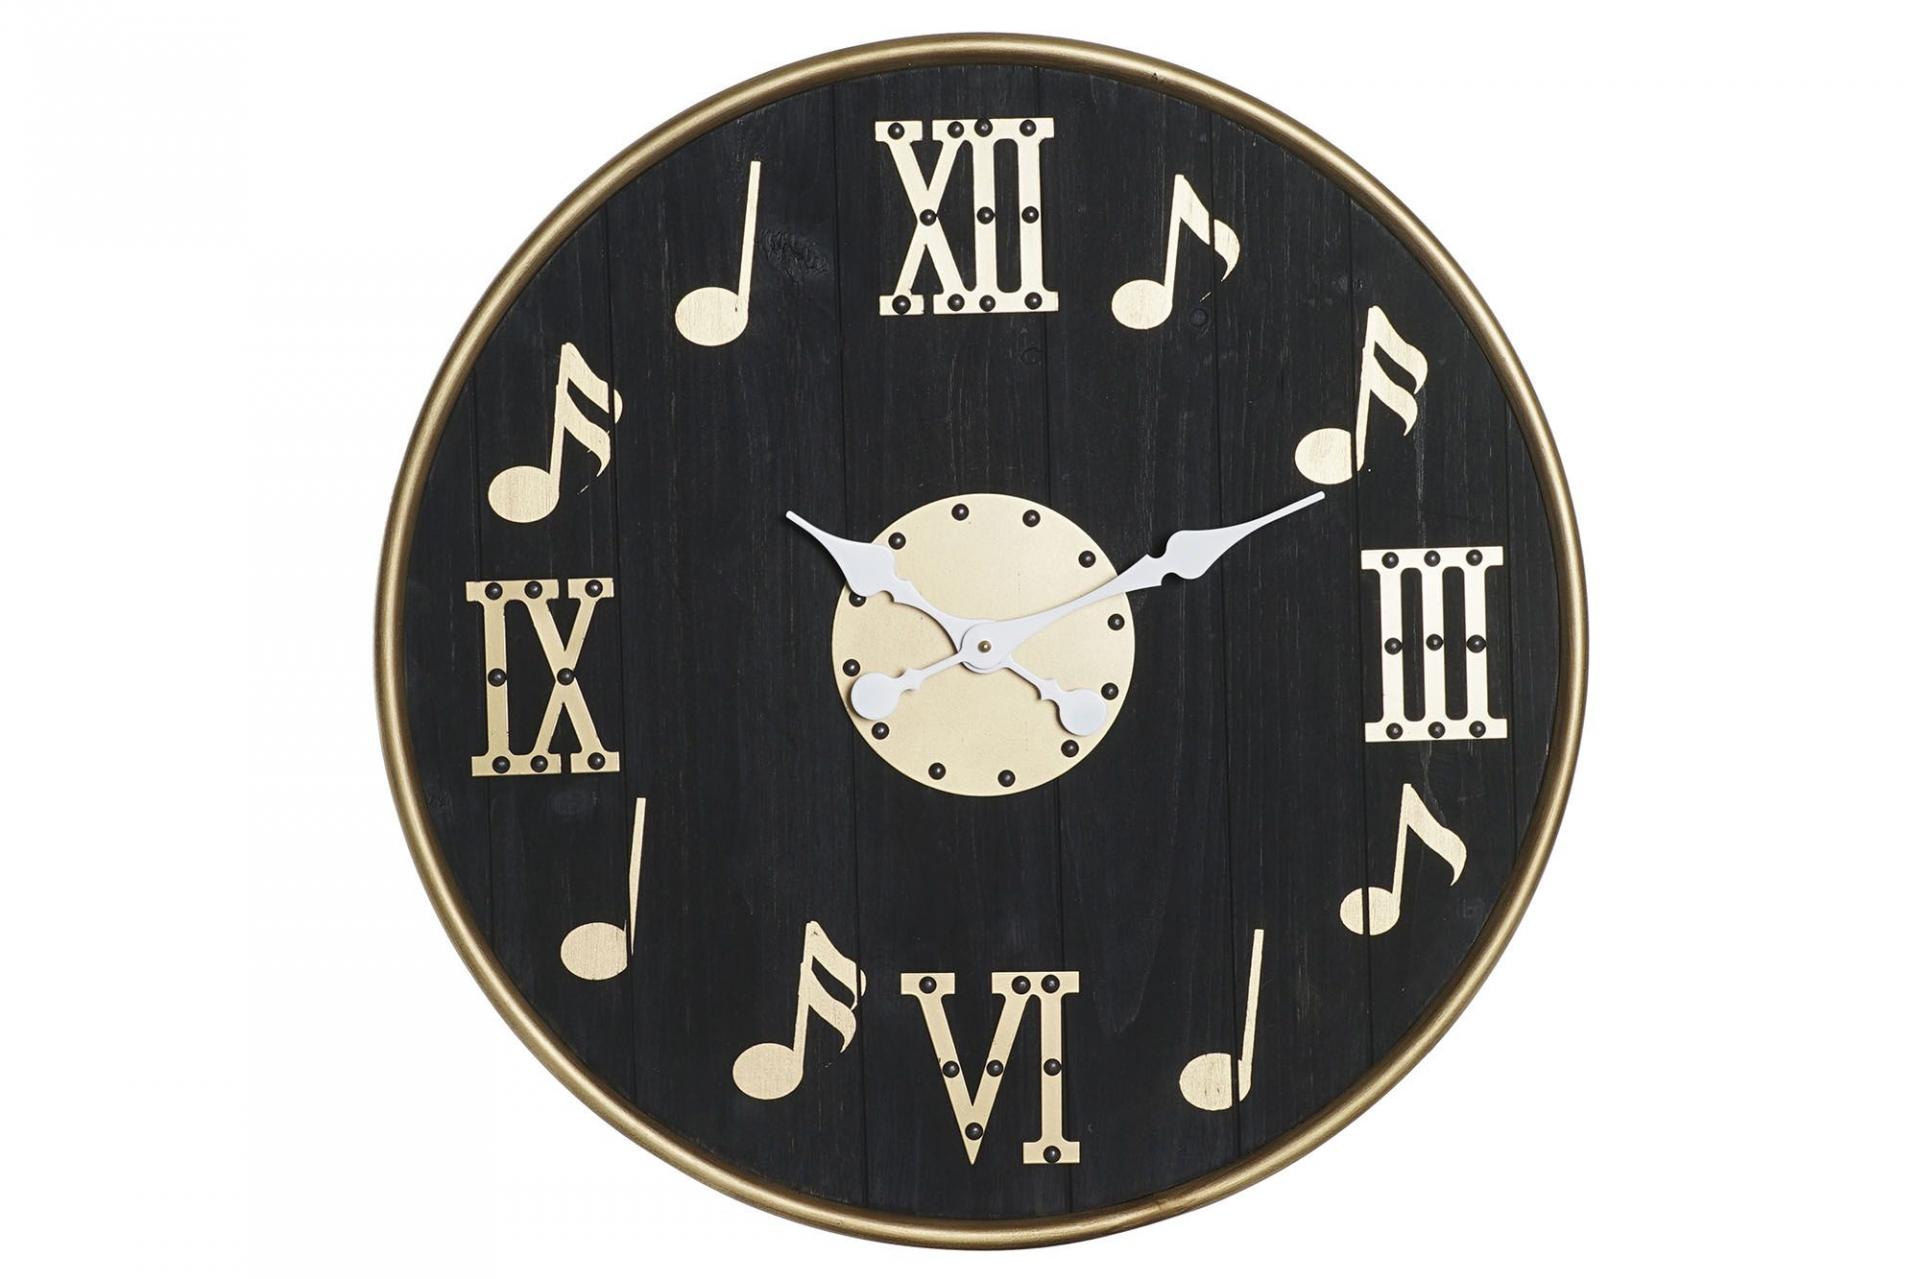 reloj-pared-disco-vinilo-negro-madera-RE-180016-notas-musicales-numeros-romanos-tachuelas-vintage-musica-item-60cm-diametro-lomejorsg.jpg